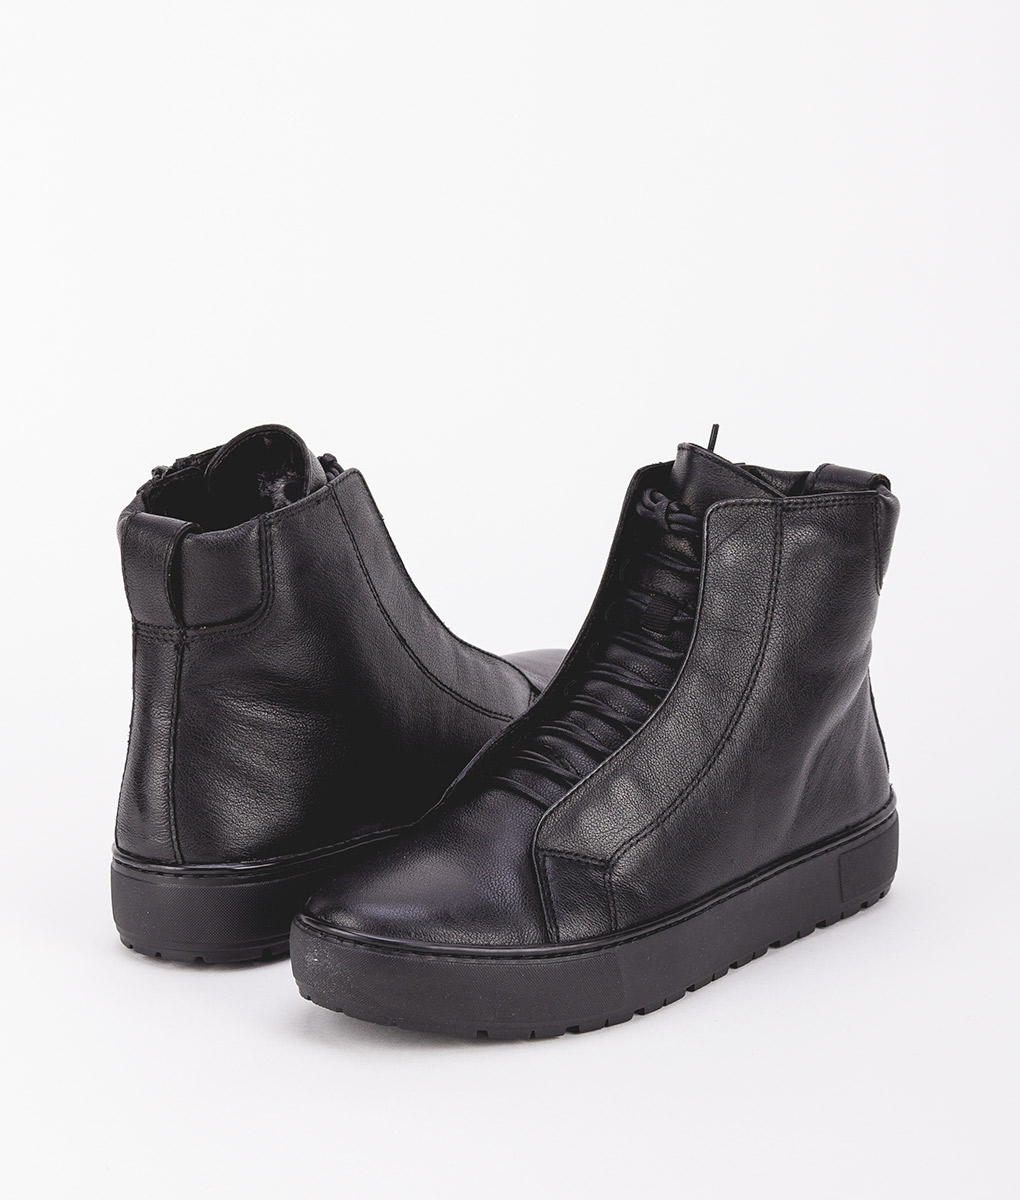 VAGABOND Ankle Boots 4433101 BREE, Black 129.99 | T6/8